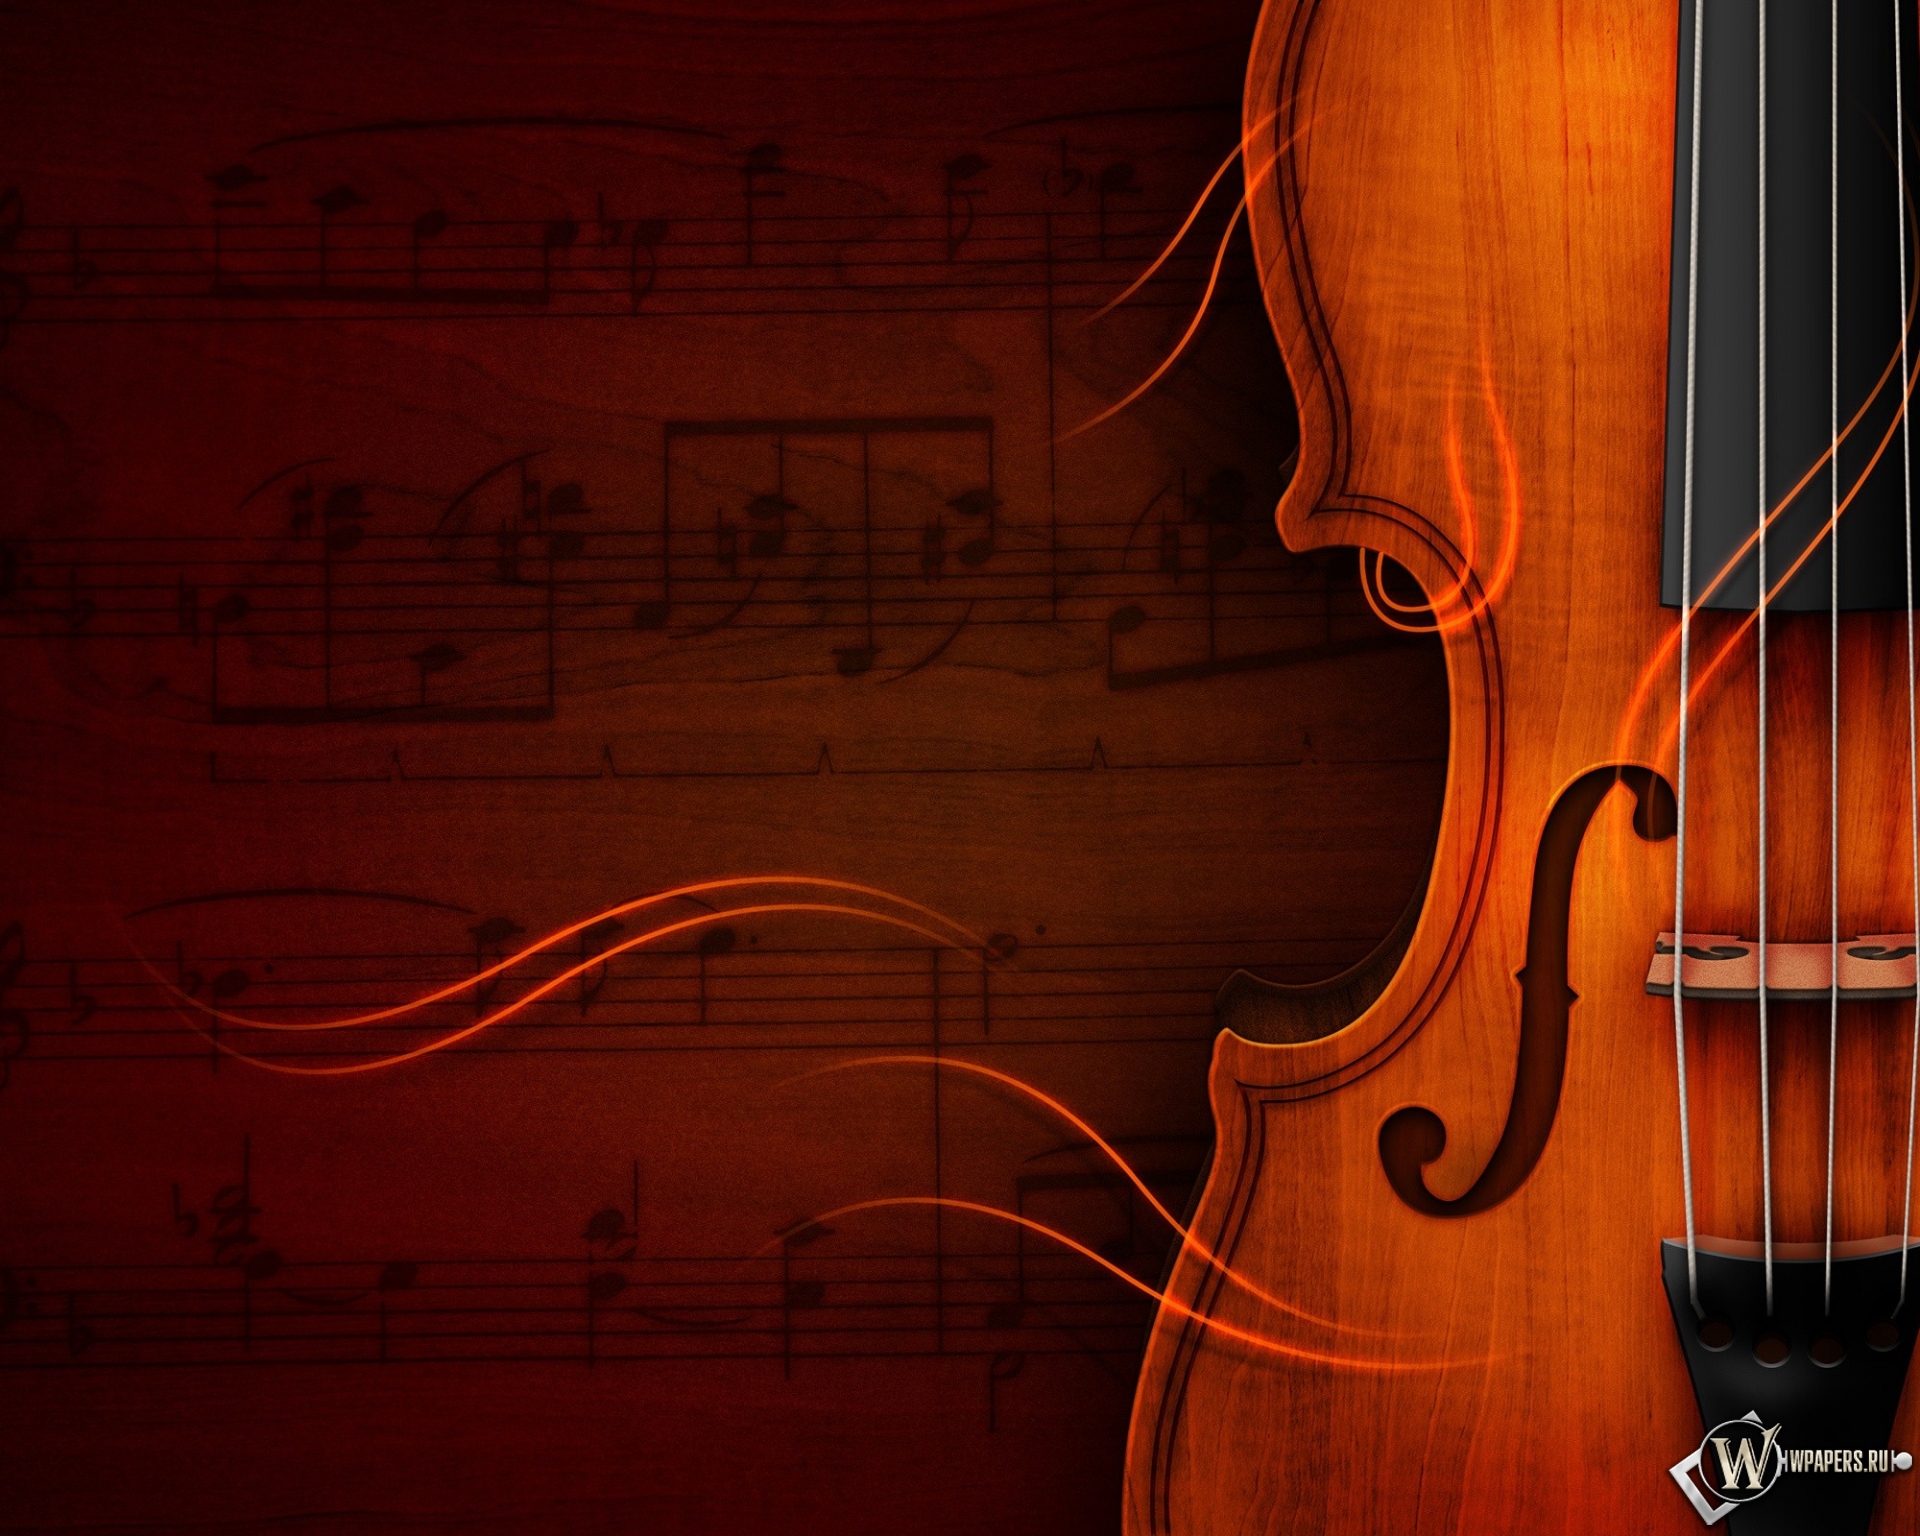 New and delightful – Master Cello!